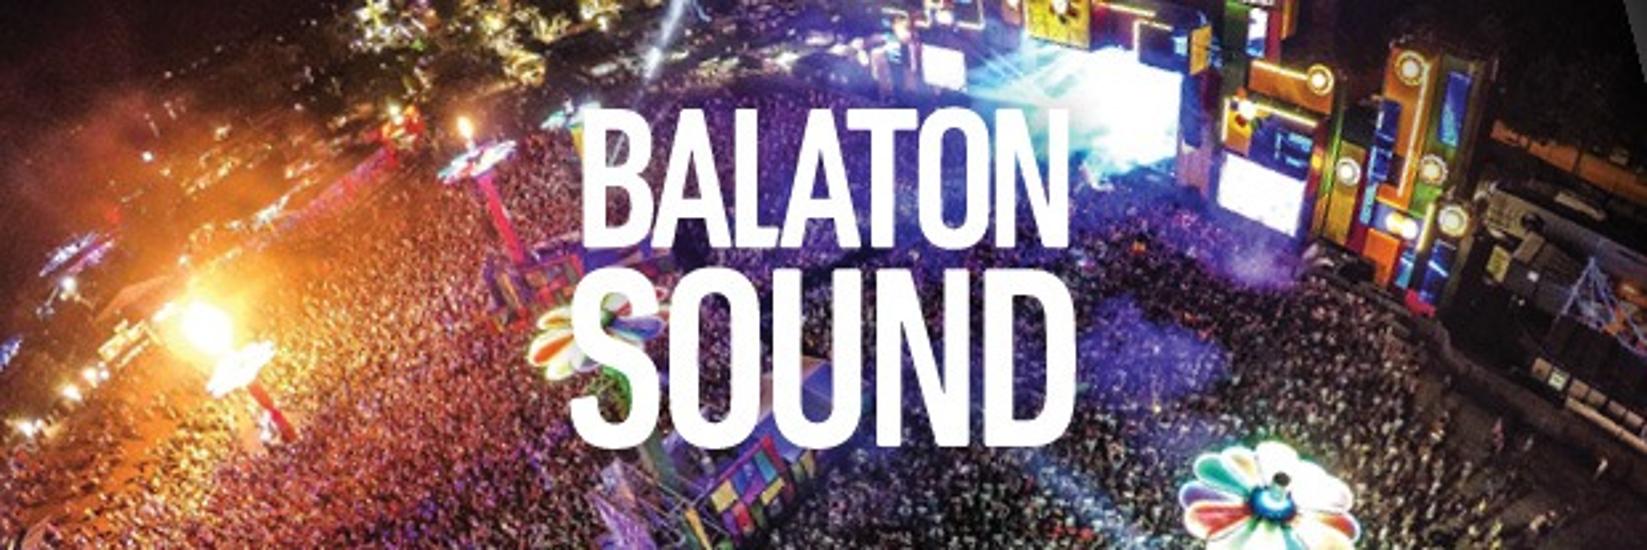 New Names Announced For Balaton Sound 2016